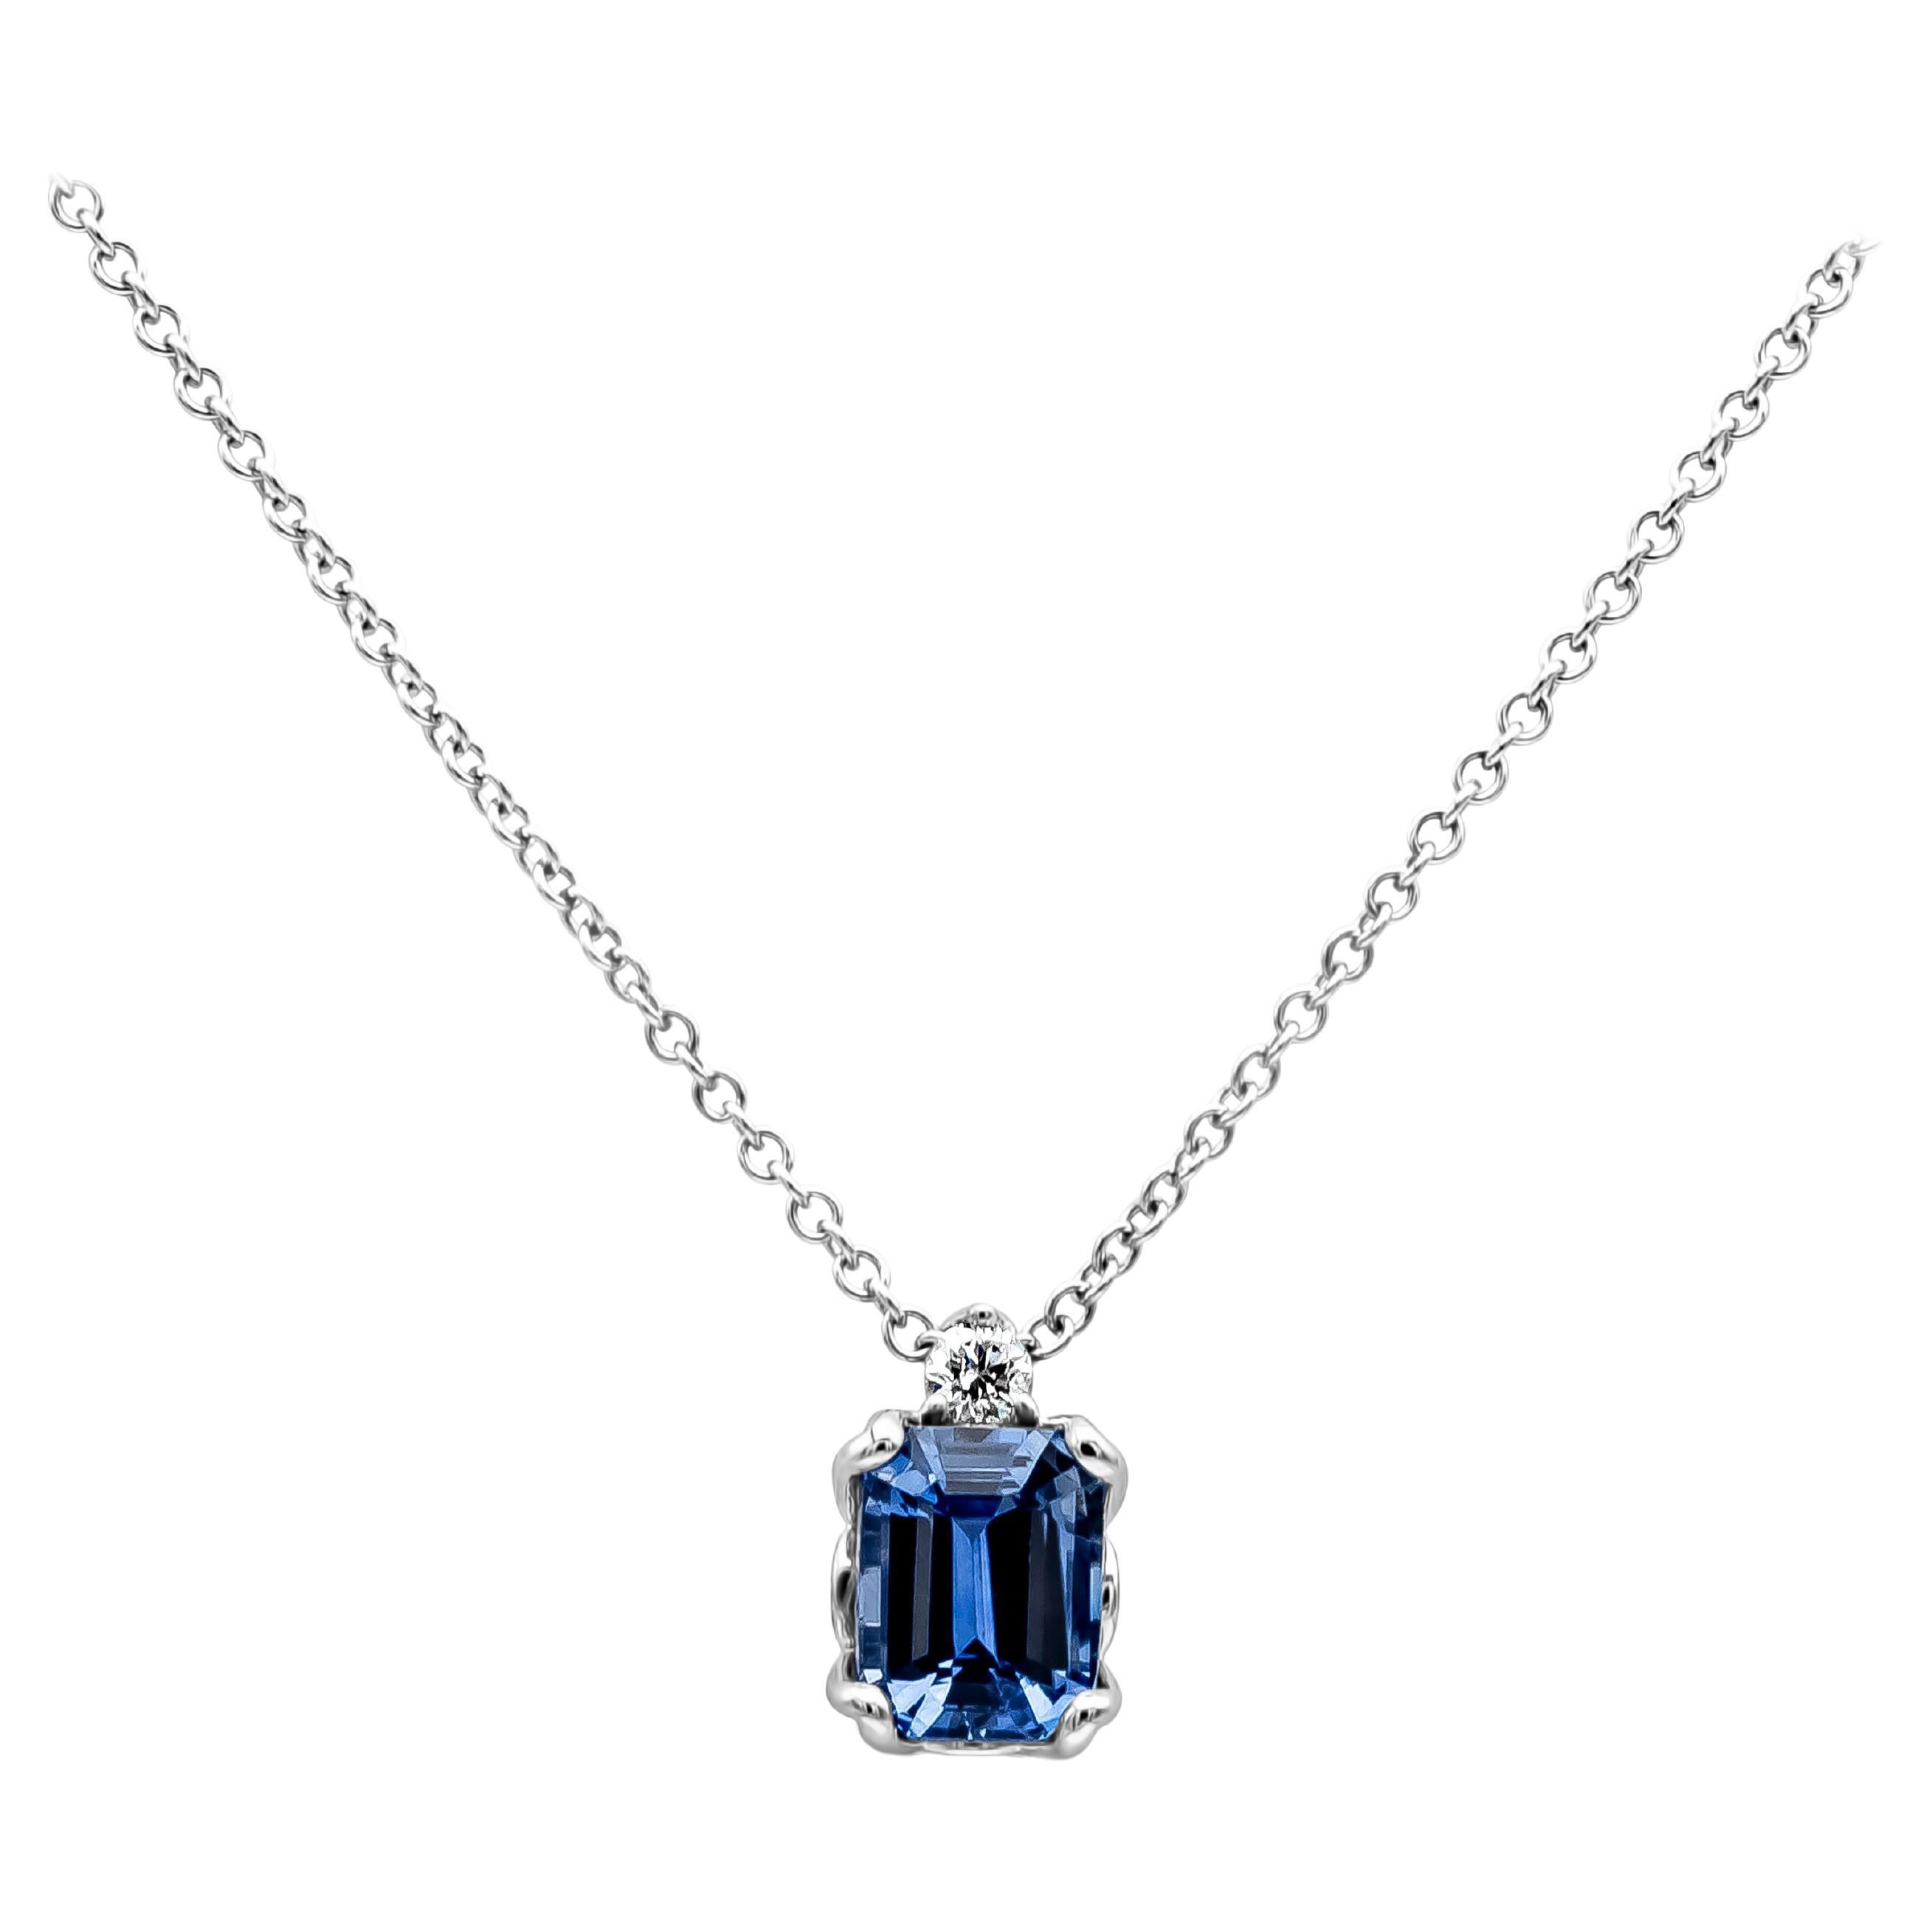 Roman Malakov GIA Certified 2.77 Carat Emerald Cut Sapphire Pendant Necklace